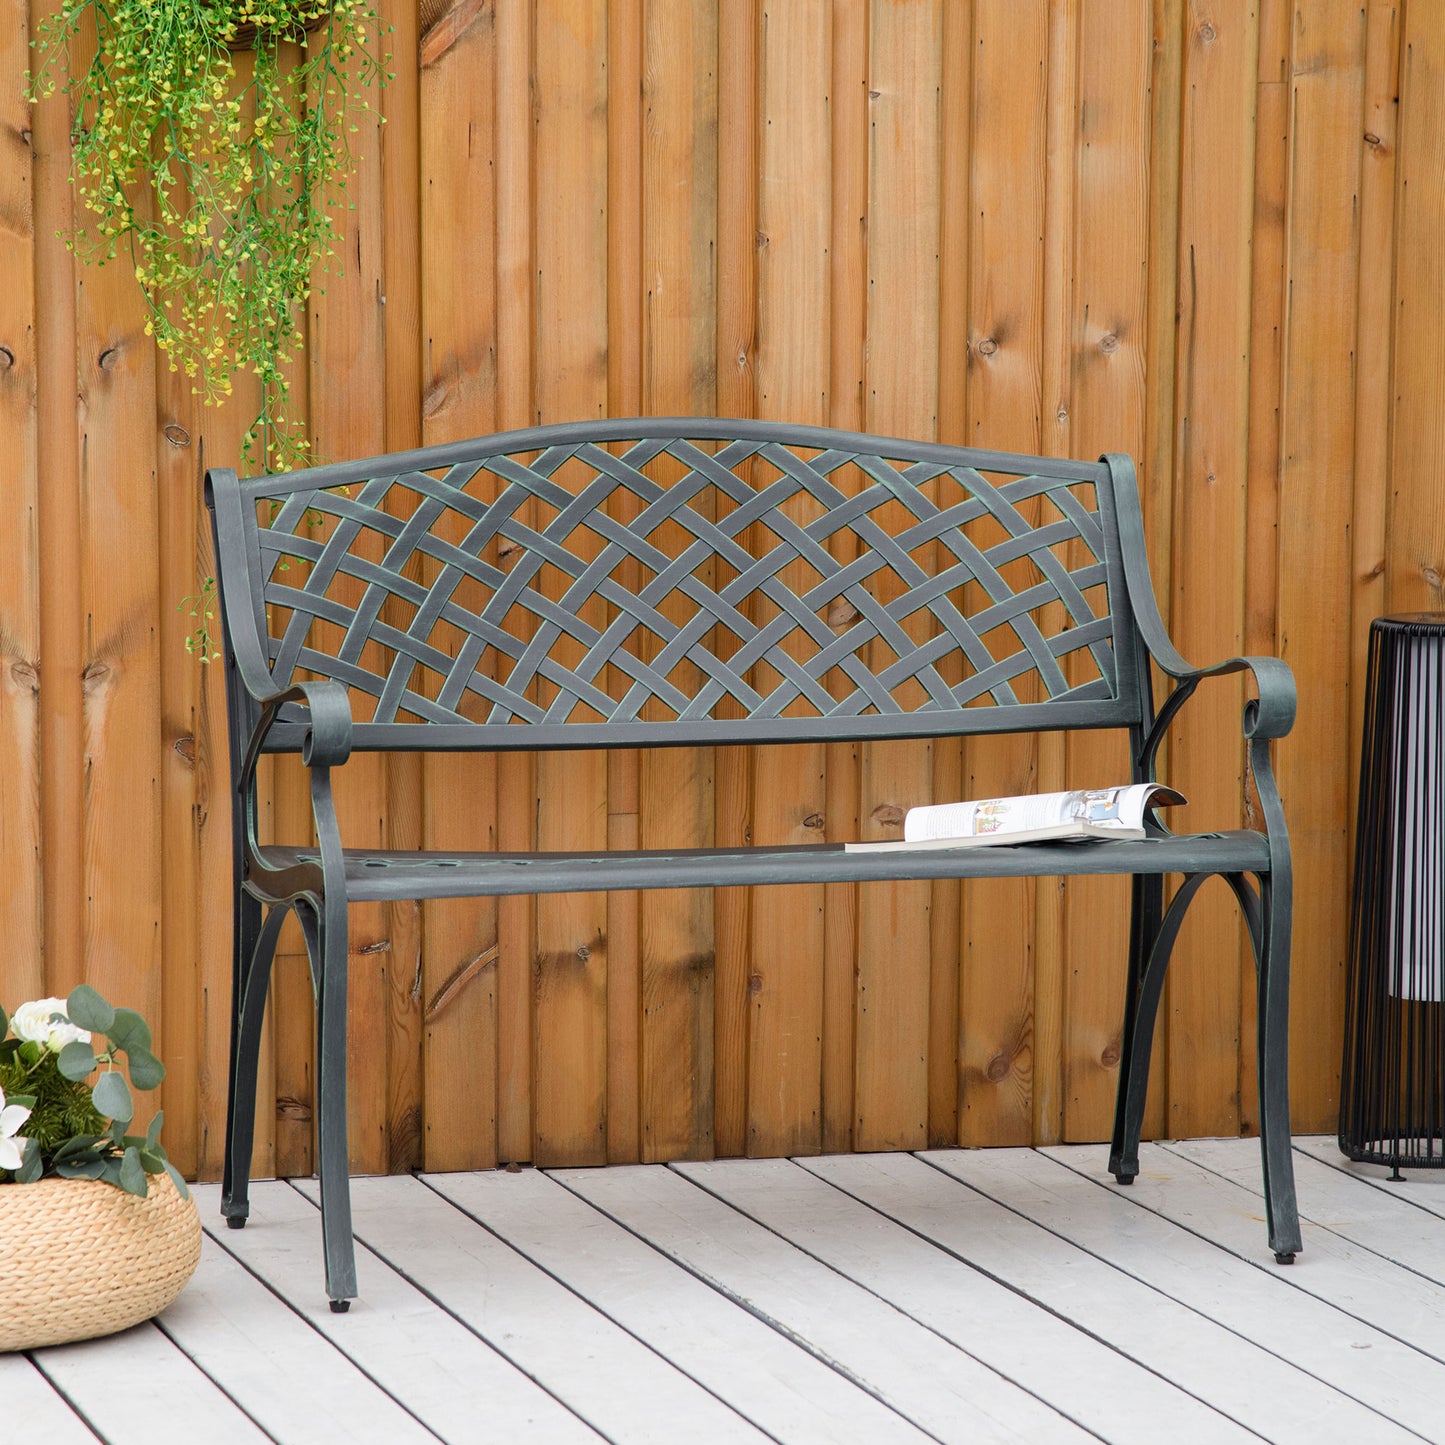 Outsunny Cast Aluminium Garden Bench 2 Seater Antique Loveseat for Outdoor Patio Porch Park, Verdigris